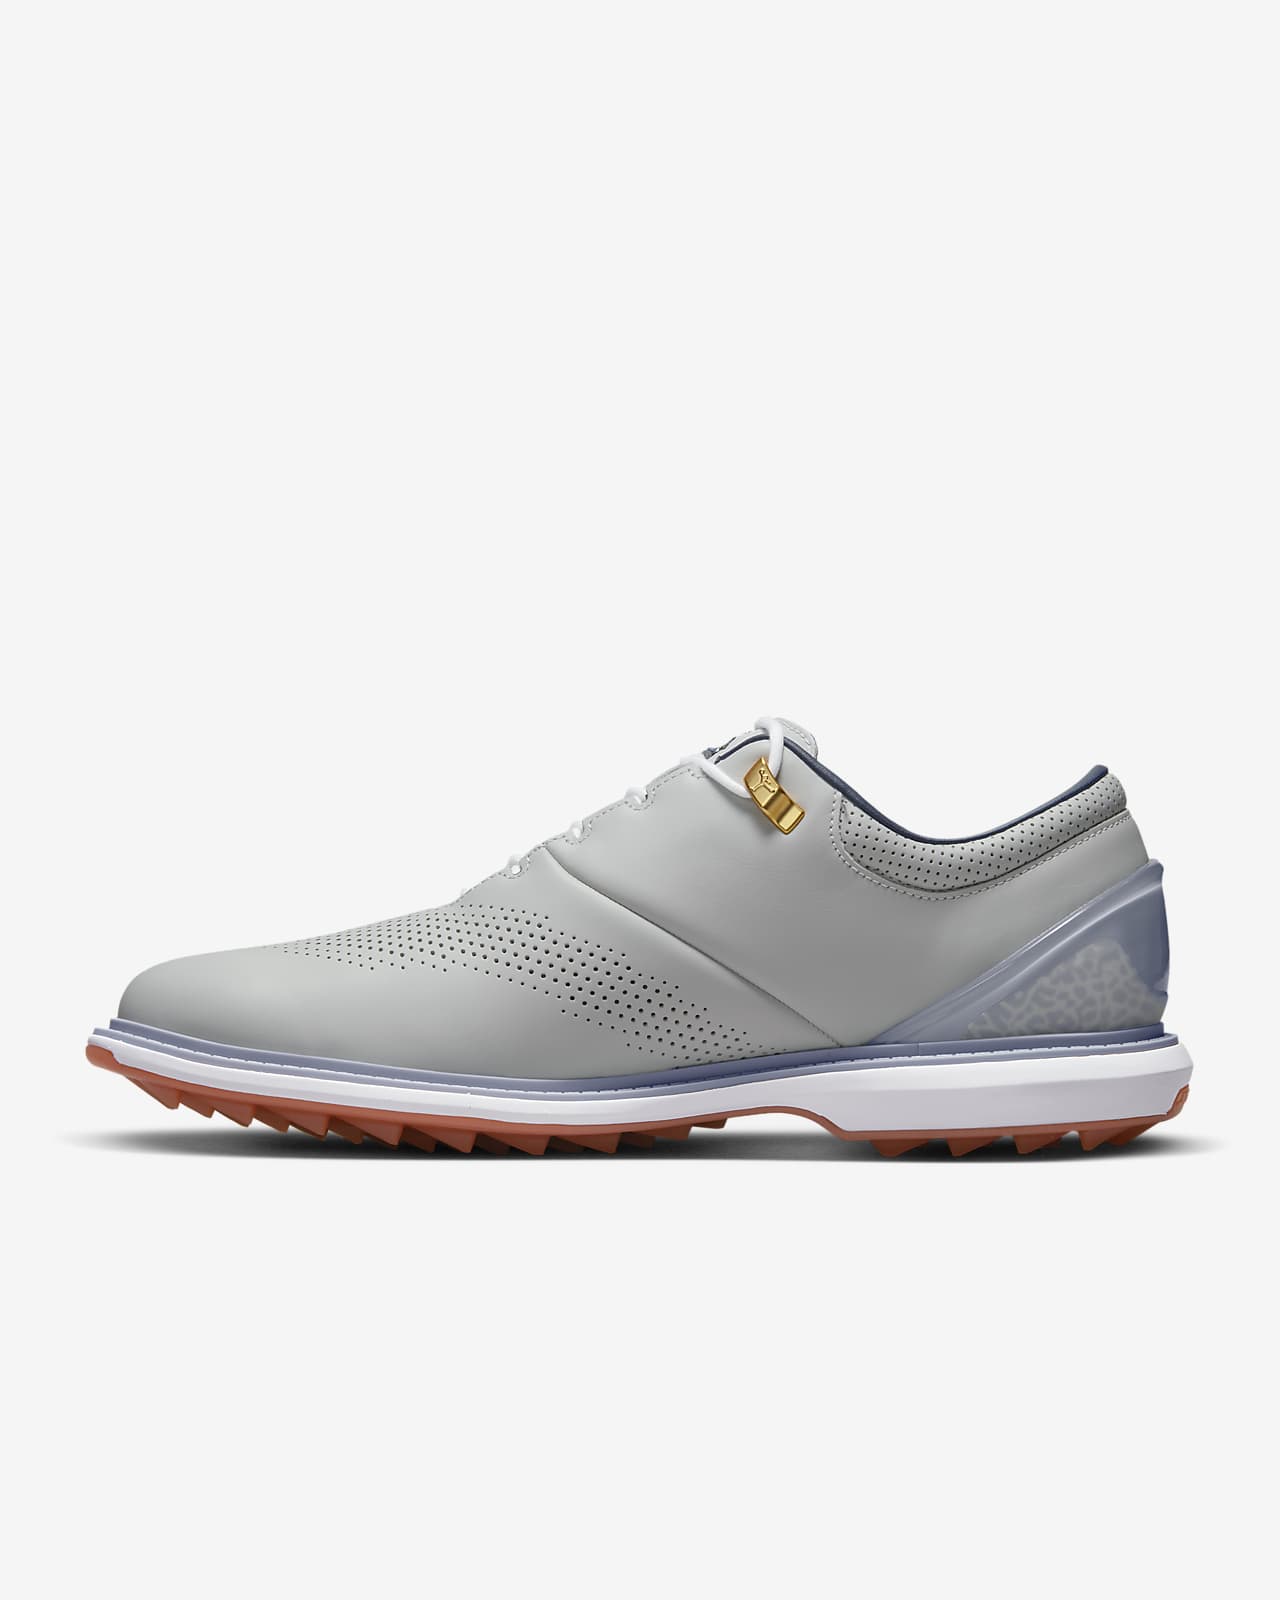 Jordan ADG 4 NRG Men's Golf Shoes